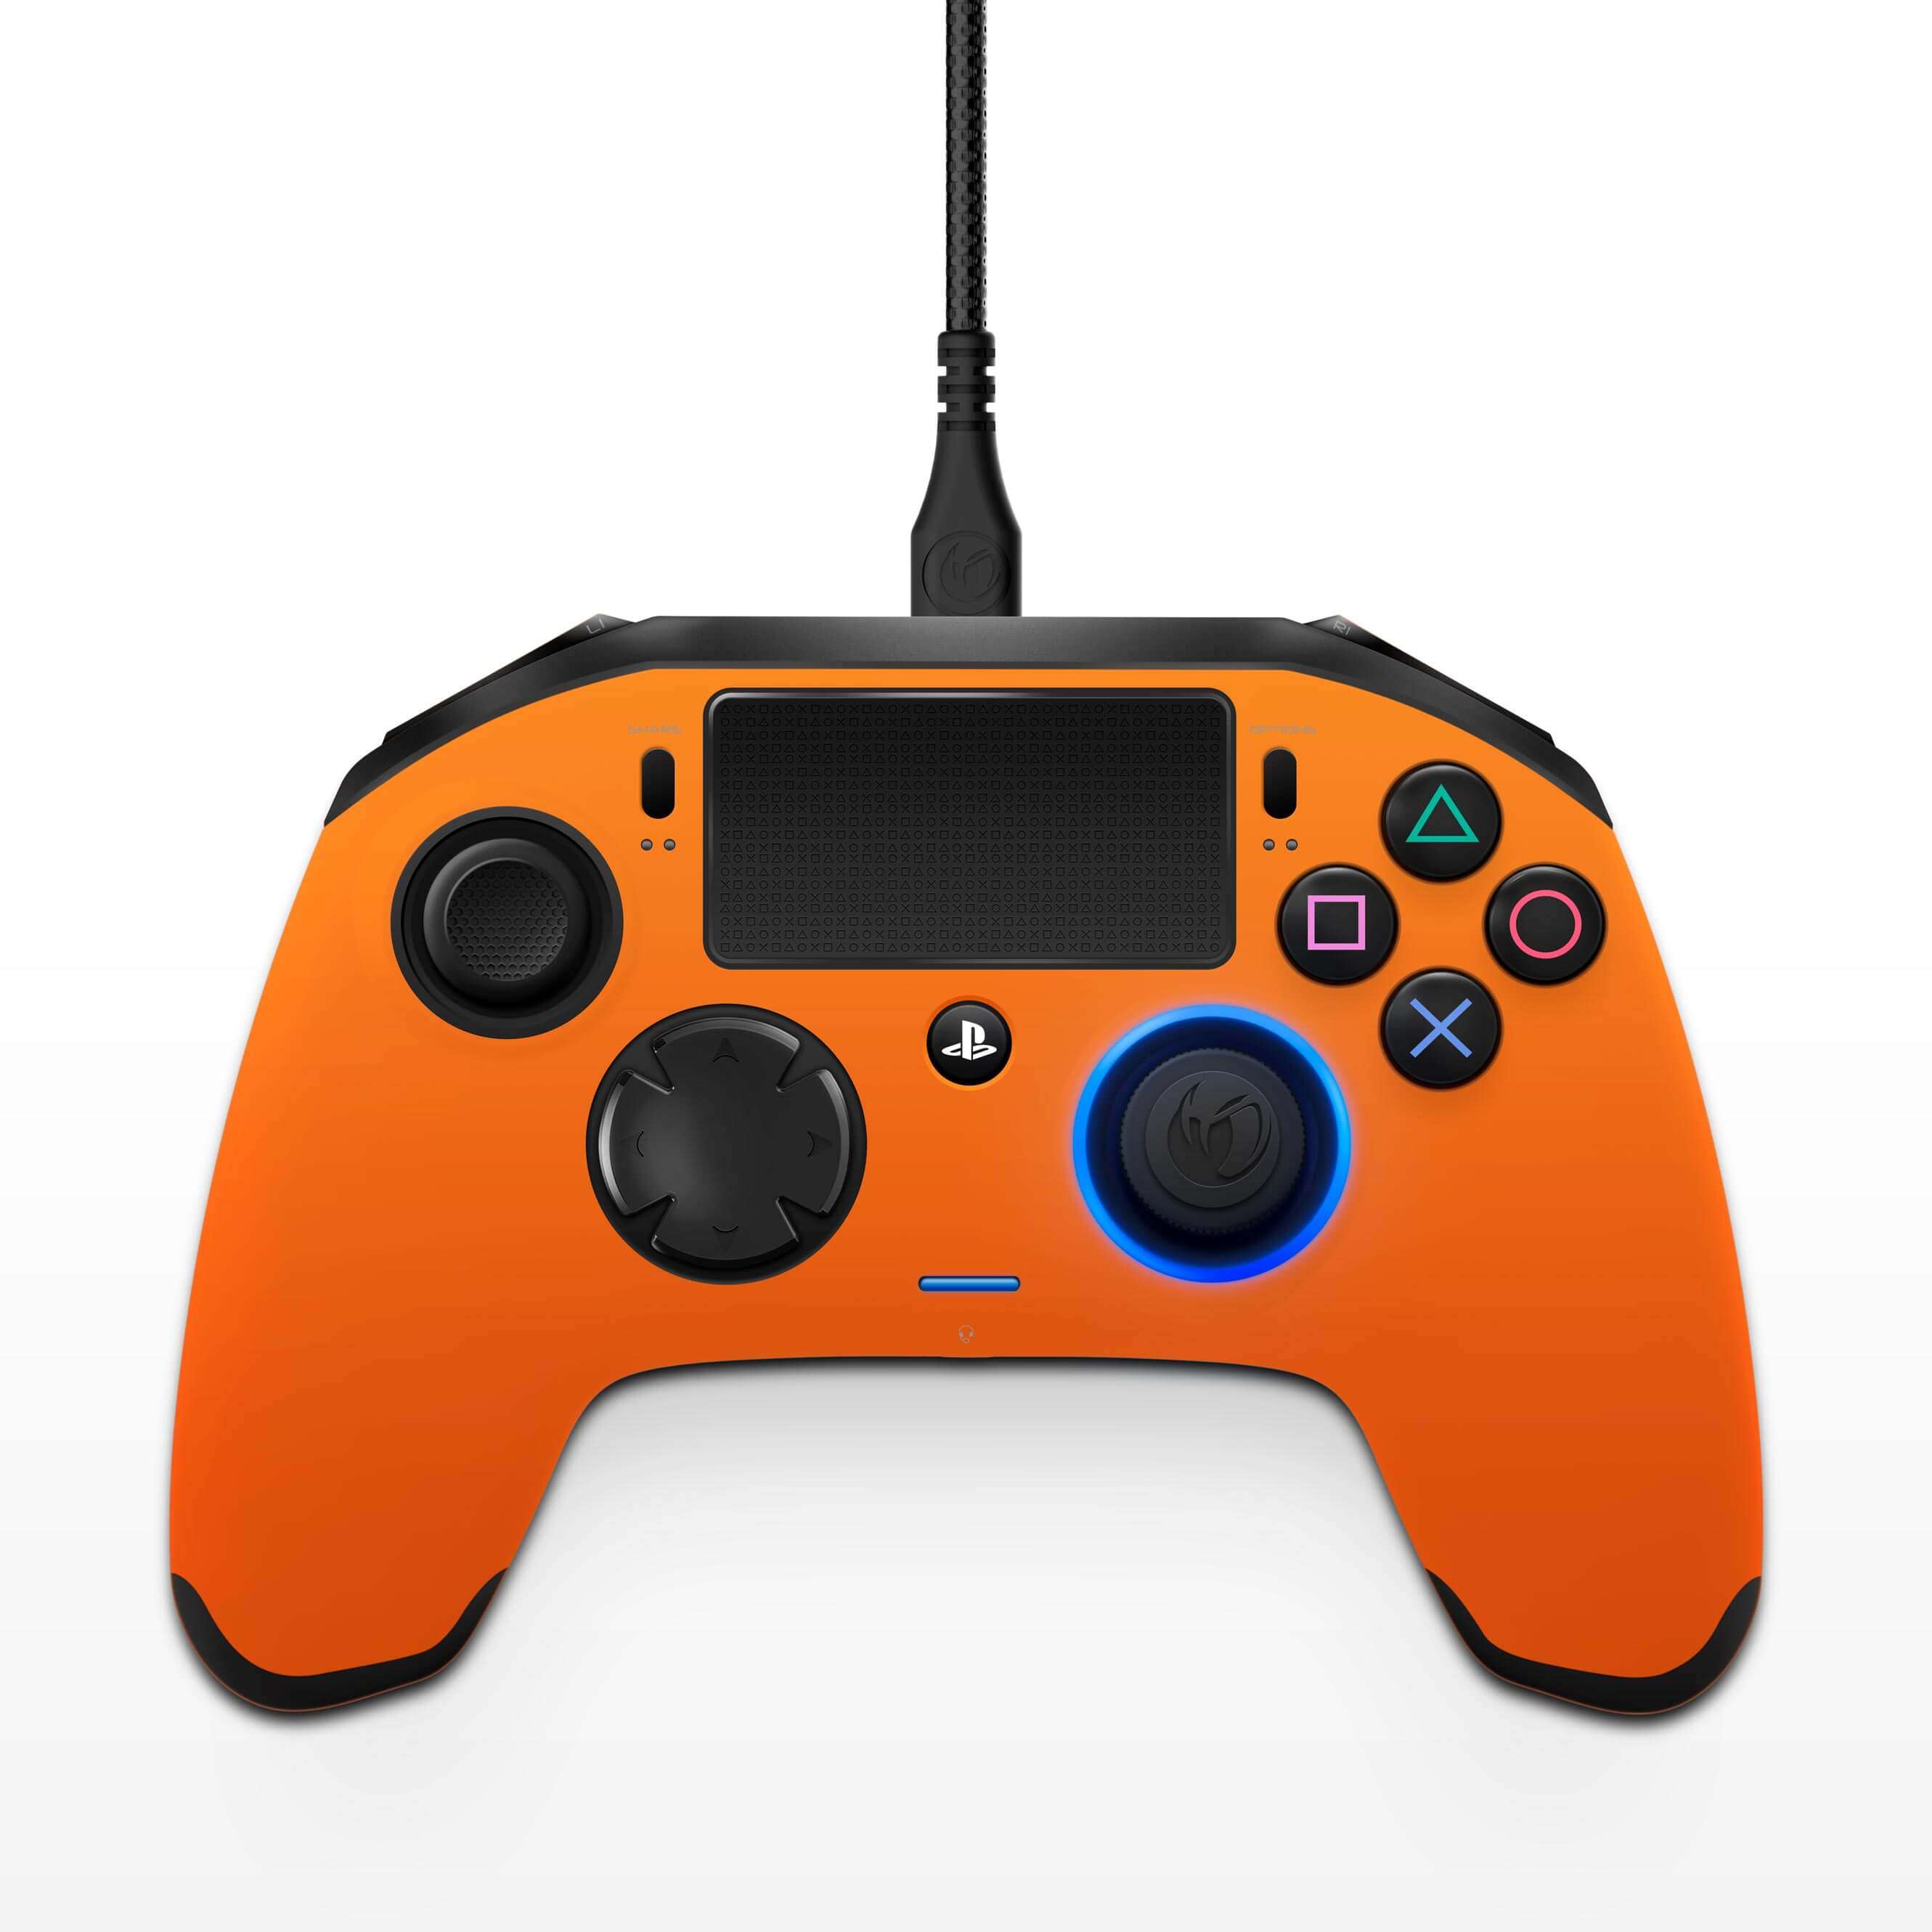  Nacon Revolution Pro Controller 2 For PlayStation 4-Orange